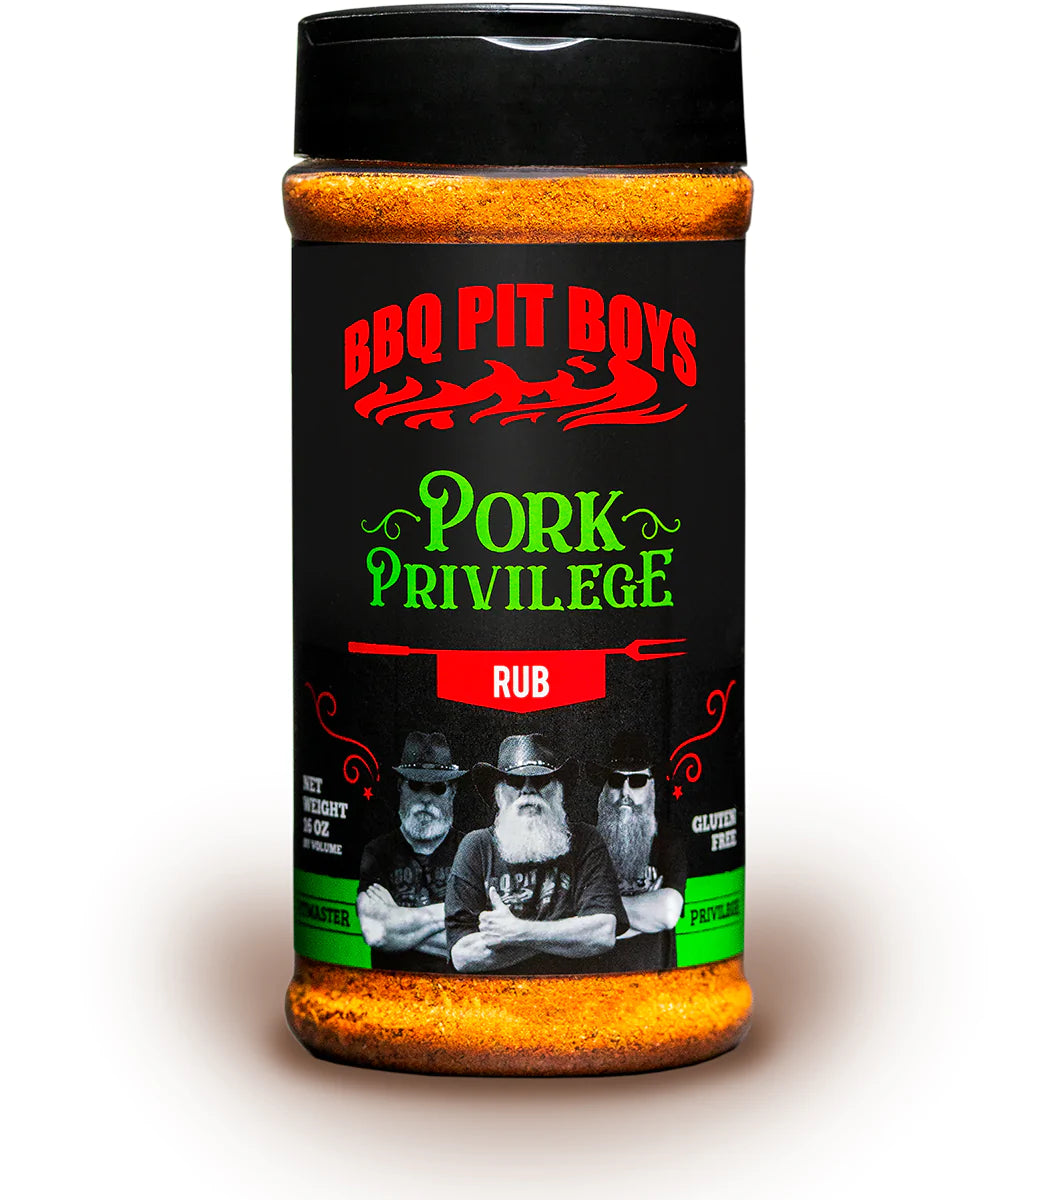 BBQ Pit Boys "Pork Privilege"